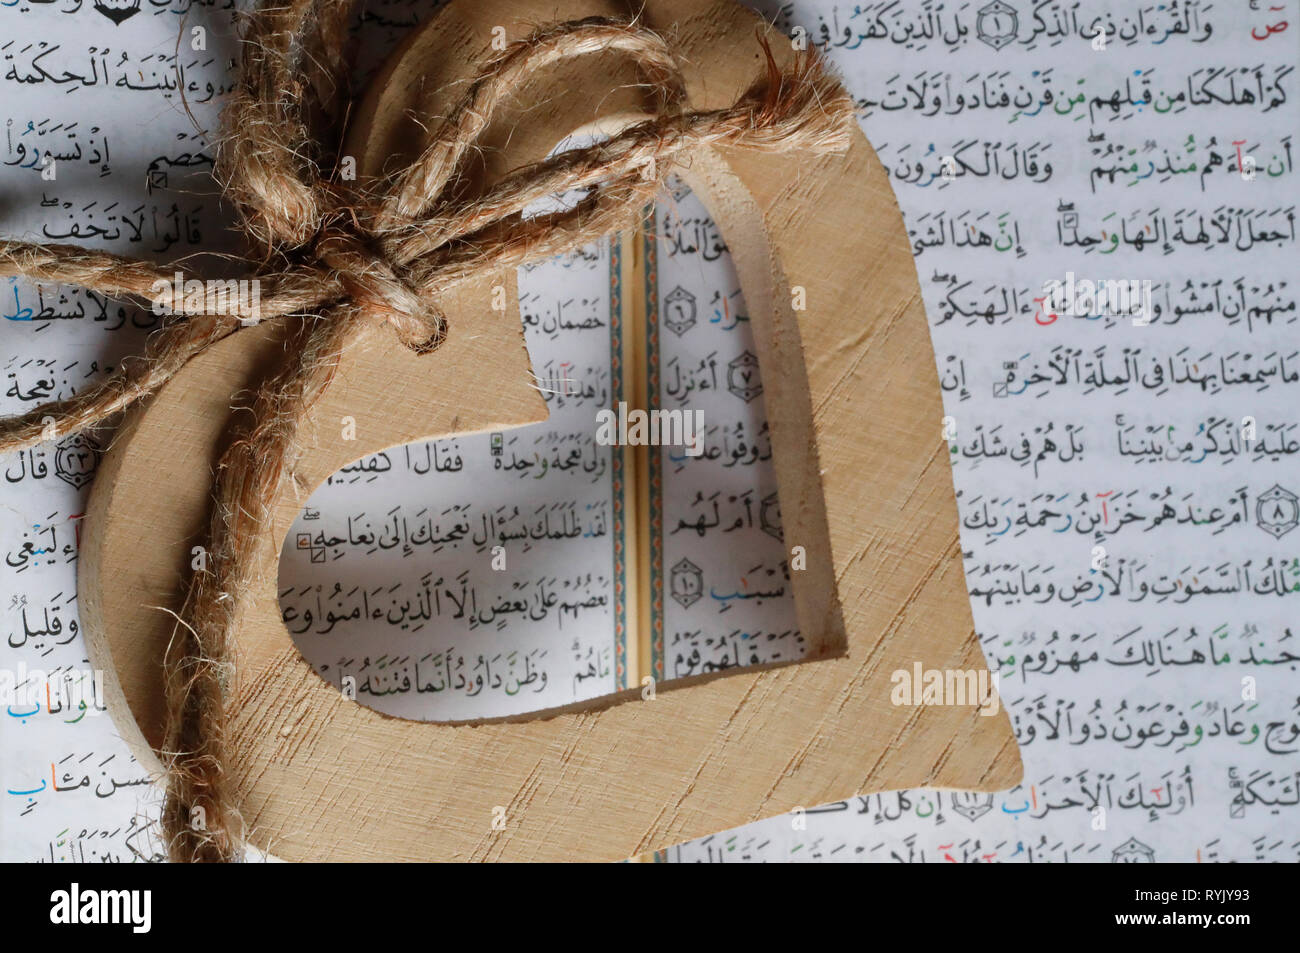 Corazón de madera escultura sobre un Corán. Close-up. Foto de stock